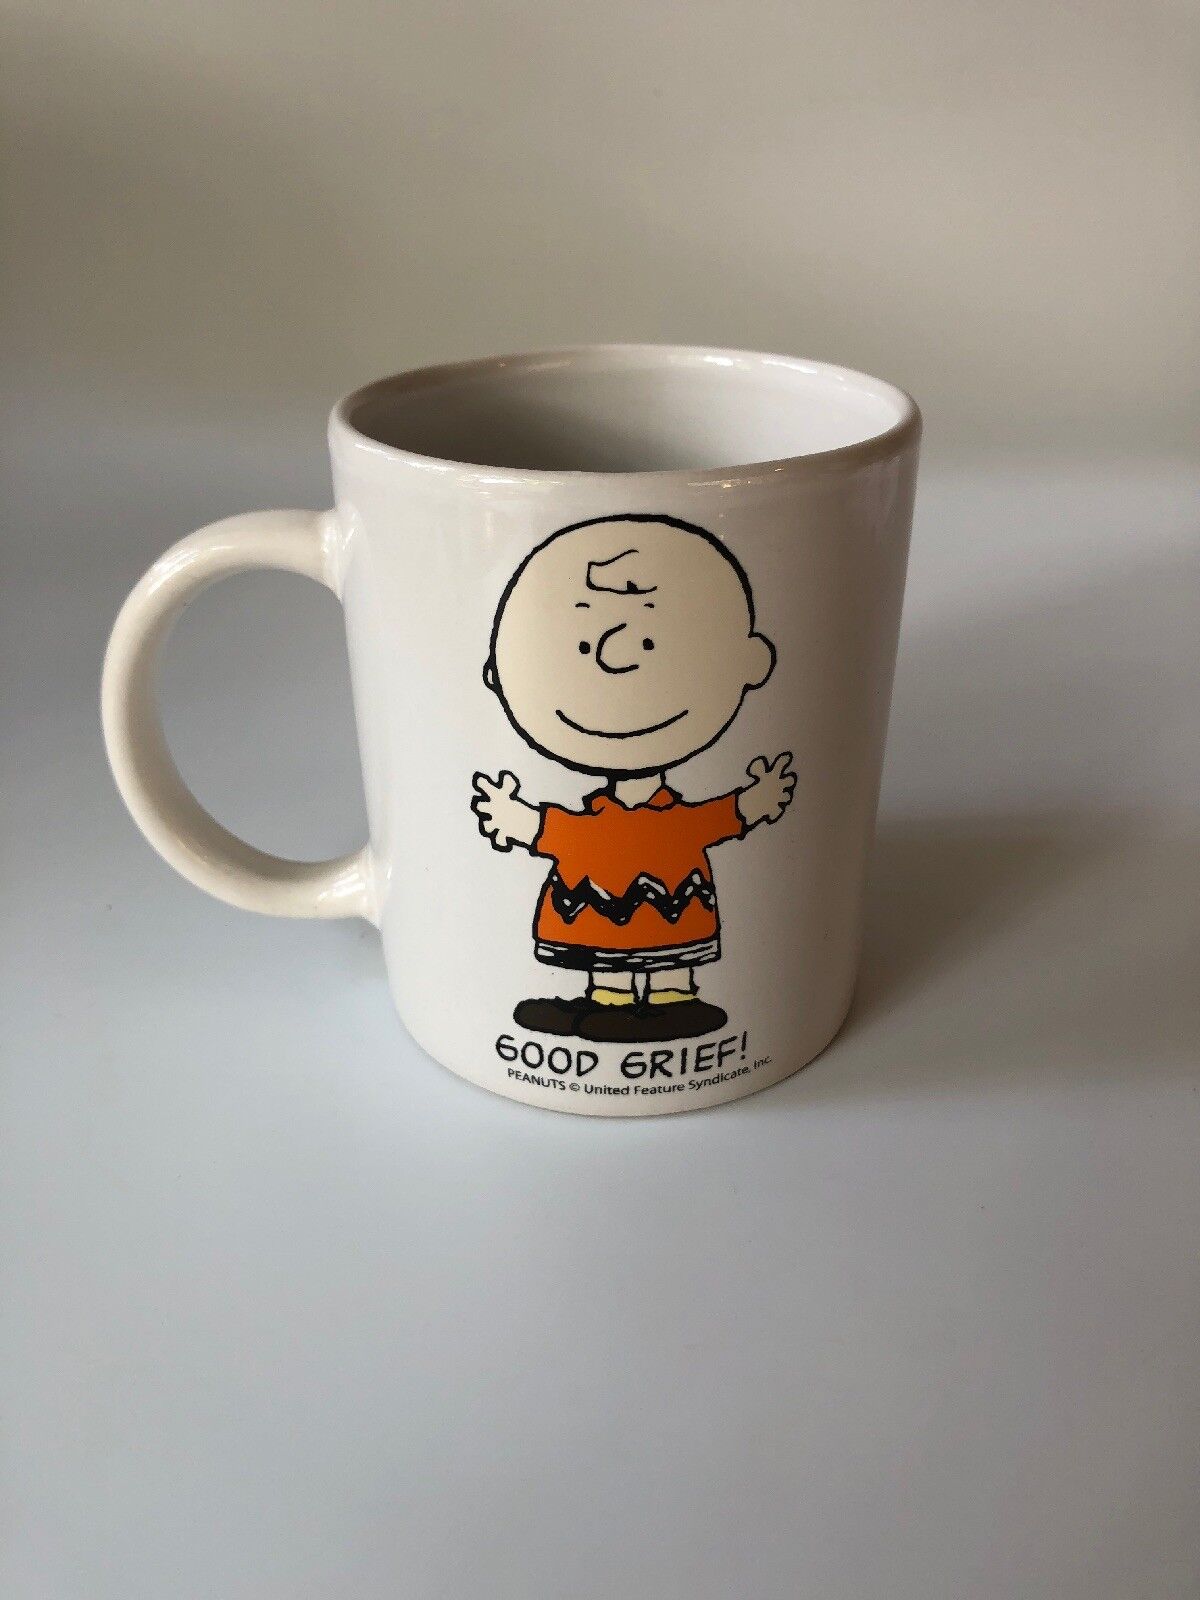 Vintage Peanuts Snoopy Charlie Brown Mug Good Grief White Coffee Cup Schultz